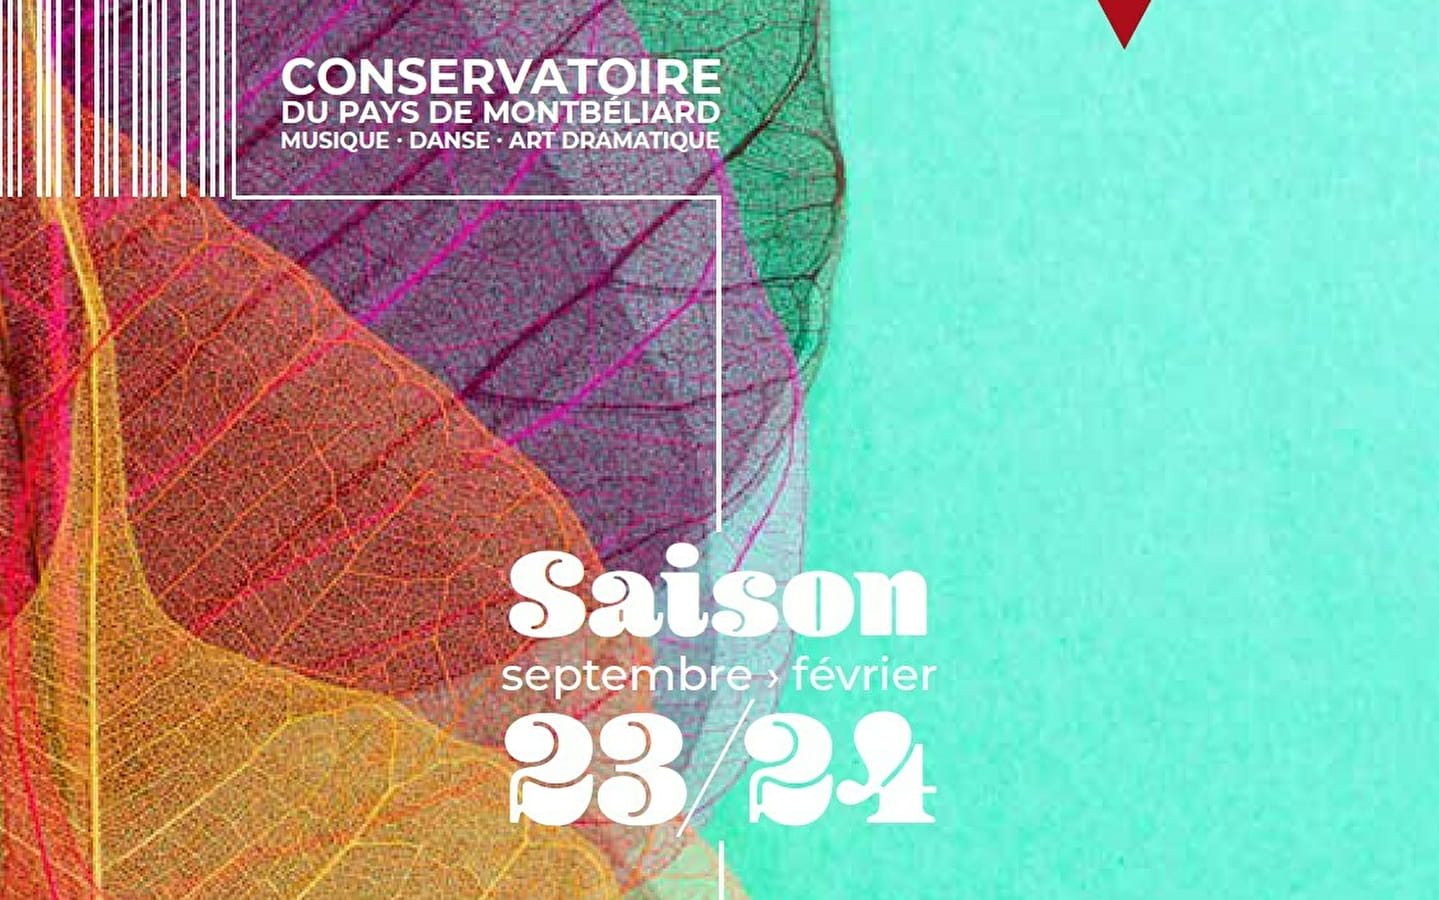 Conservatoire du Pays de Montbéliard: Programming September 2023 - February 2024